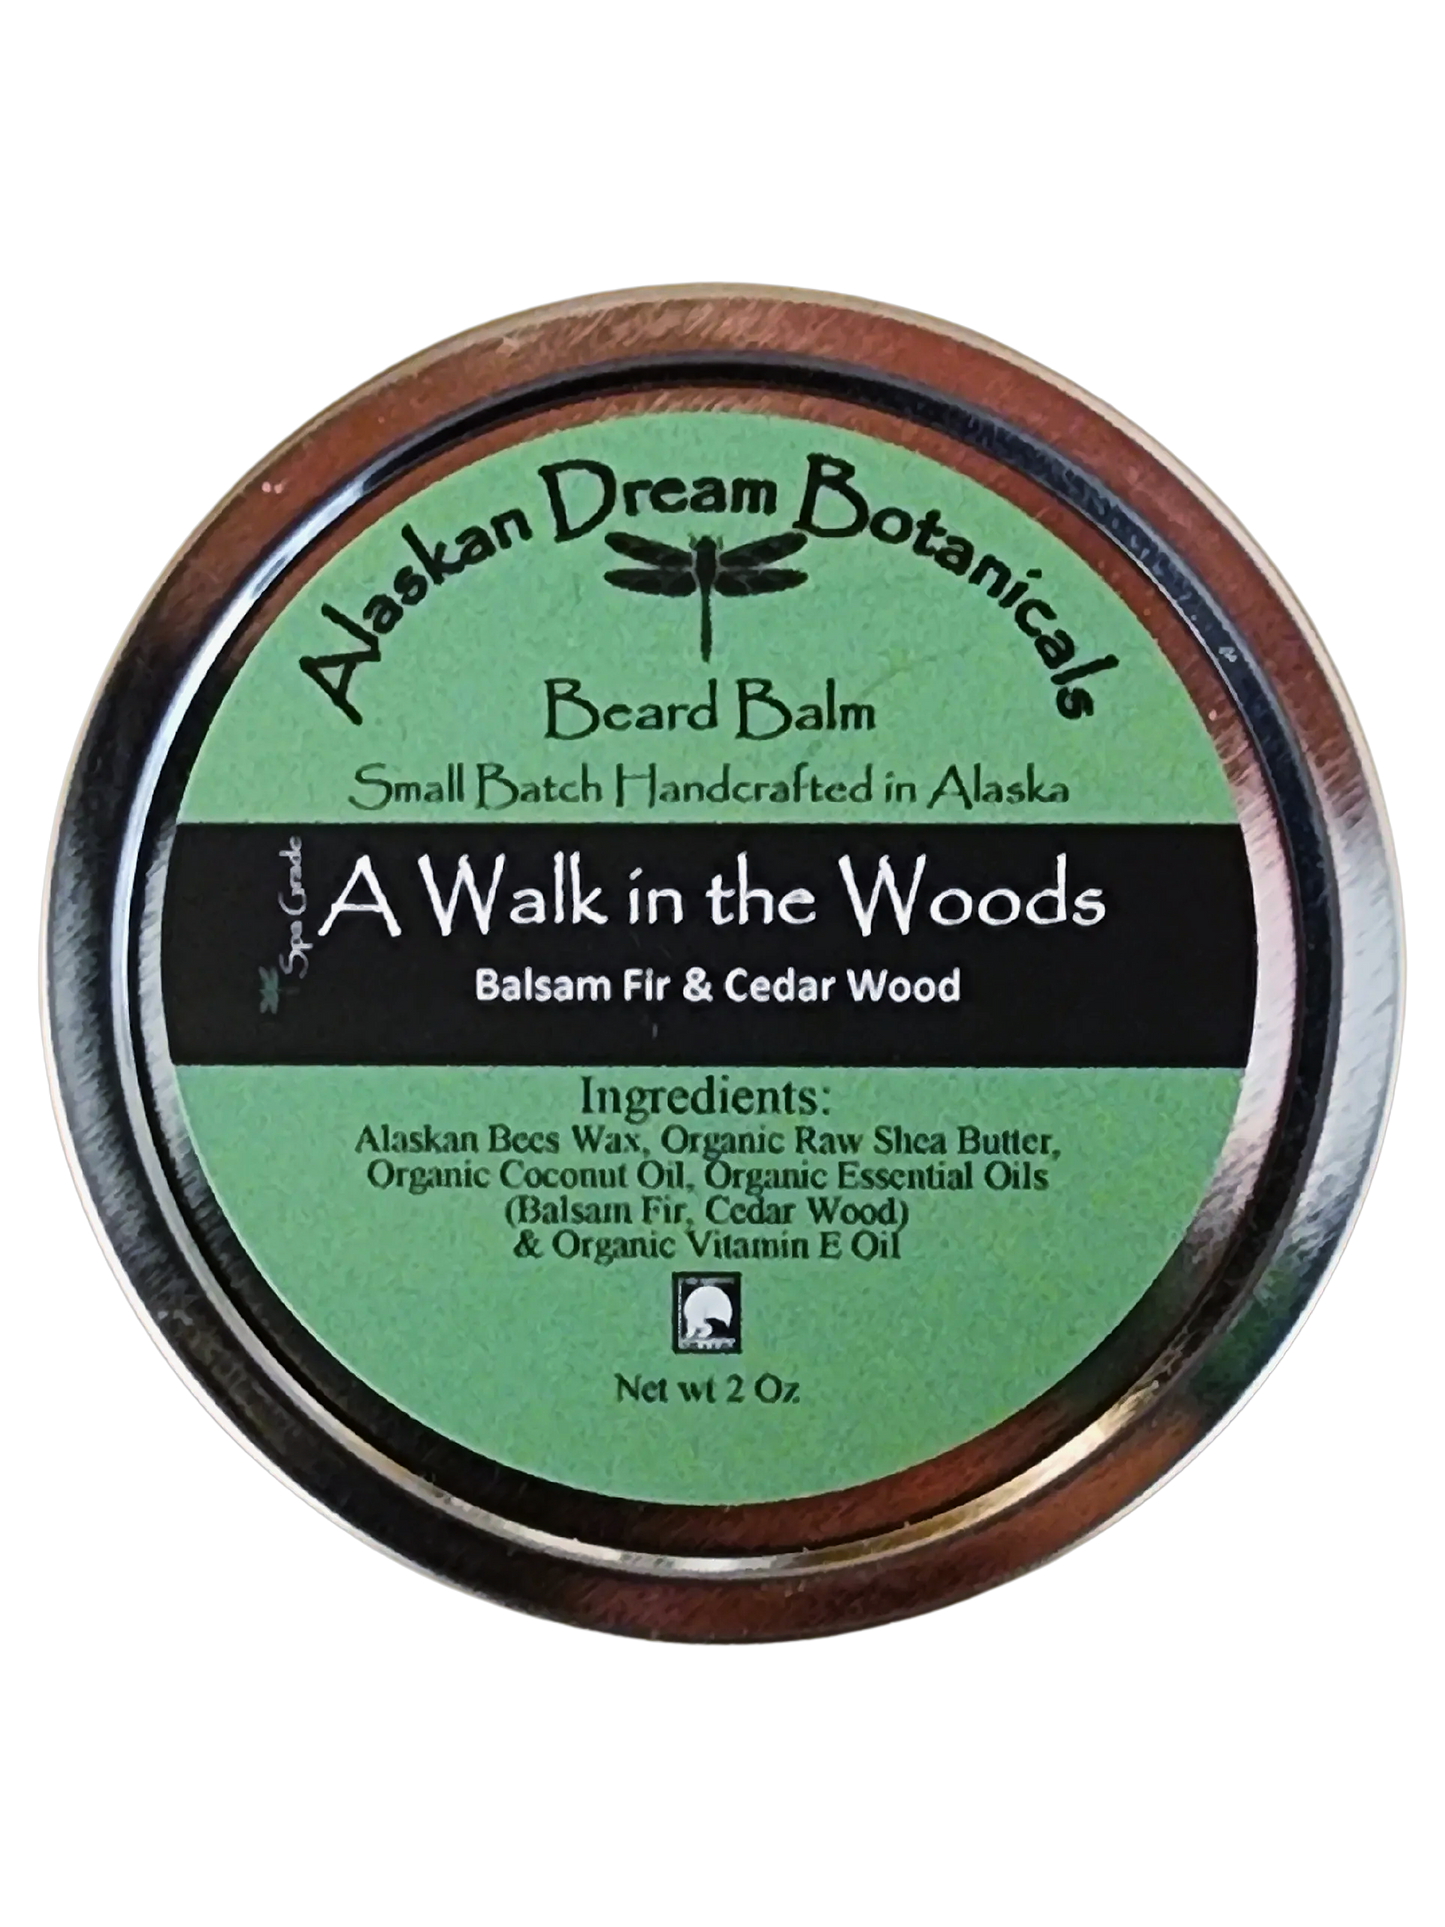 A Walk in the Woods Spa Grade Beard Balm - Alaskan Dream Botanicals